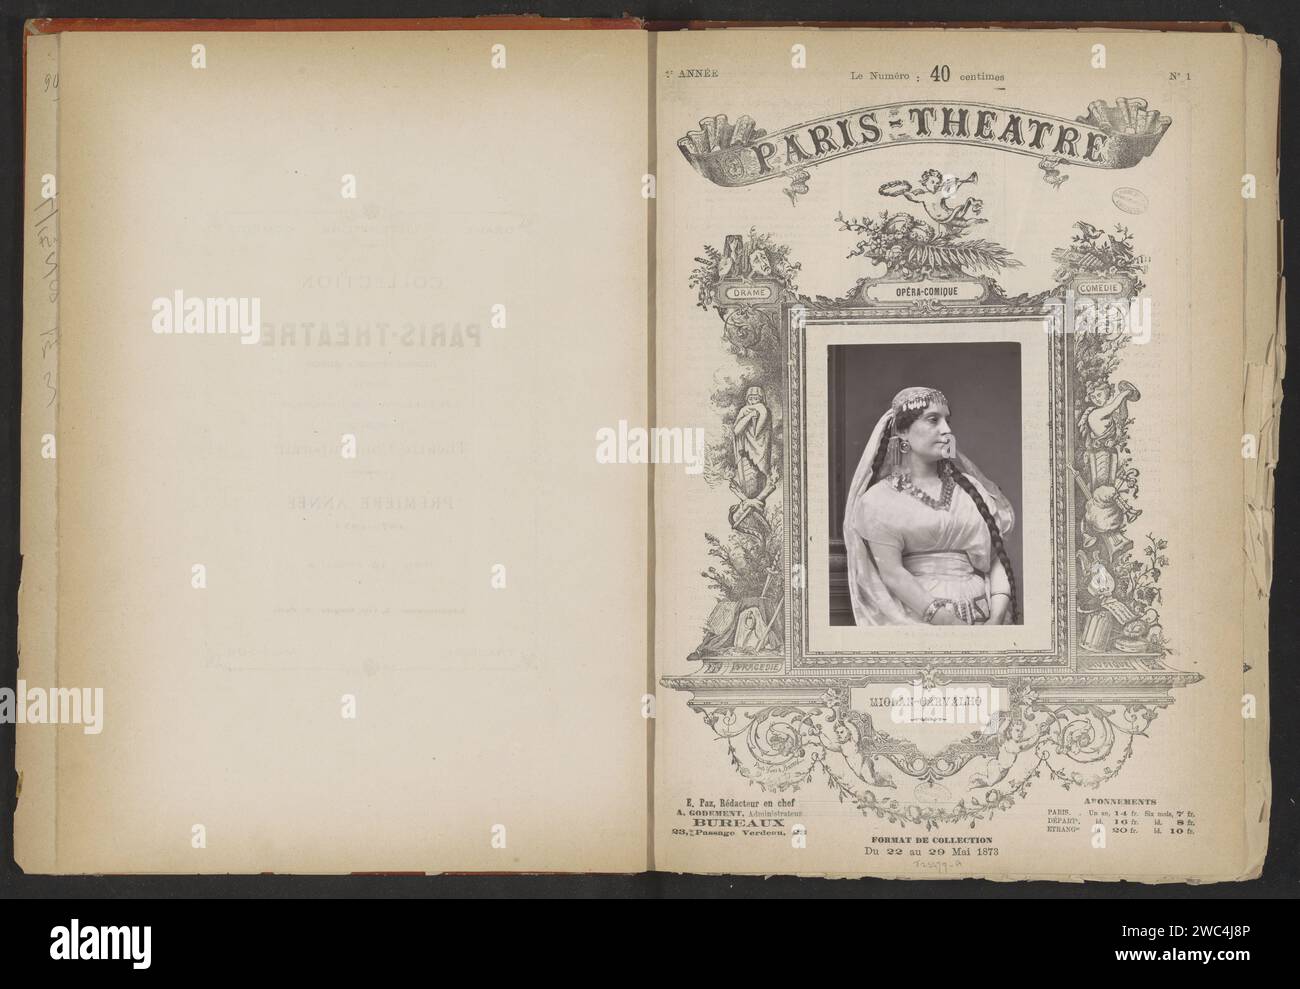 Portret van Marie Caroline Miolan-Carvalho, Achille Quinet, Yves & Barret, c. 1868 - 1873 photomechanical print  France paper  portrait of actor, actress Stock Photo